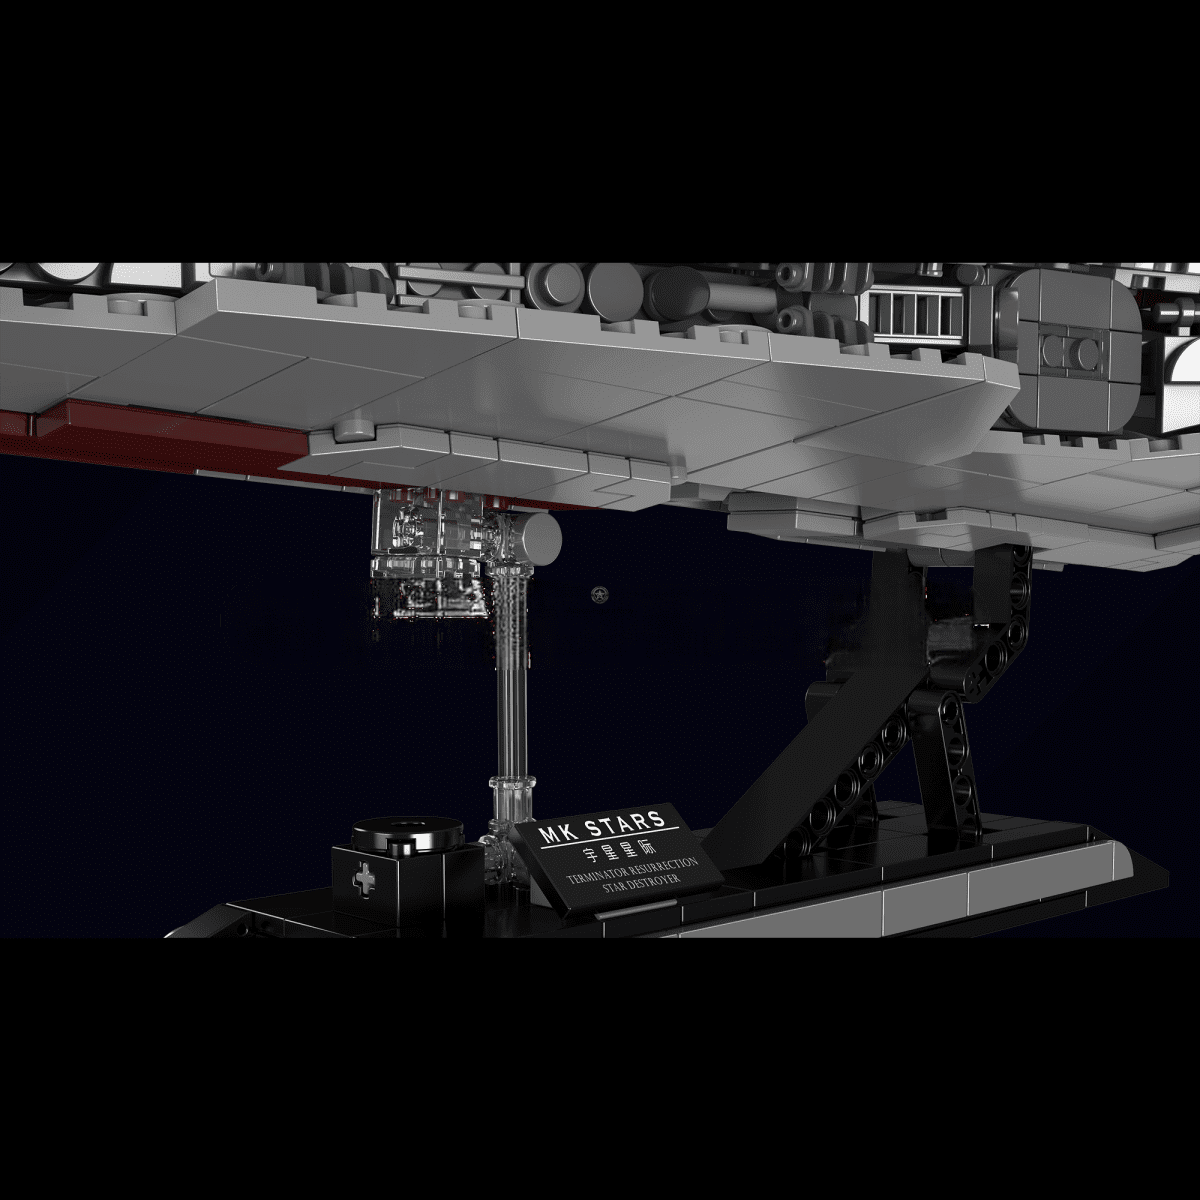 ActionFigureNow 21074 Space Wars - Republic Attack Cruiser Building Blocks Set | 1320 Pieces Kit